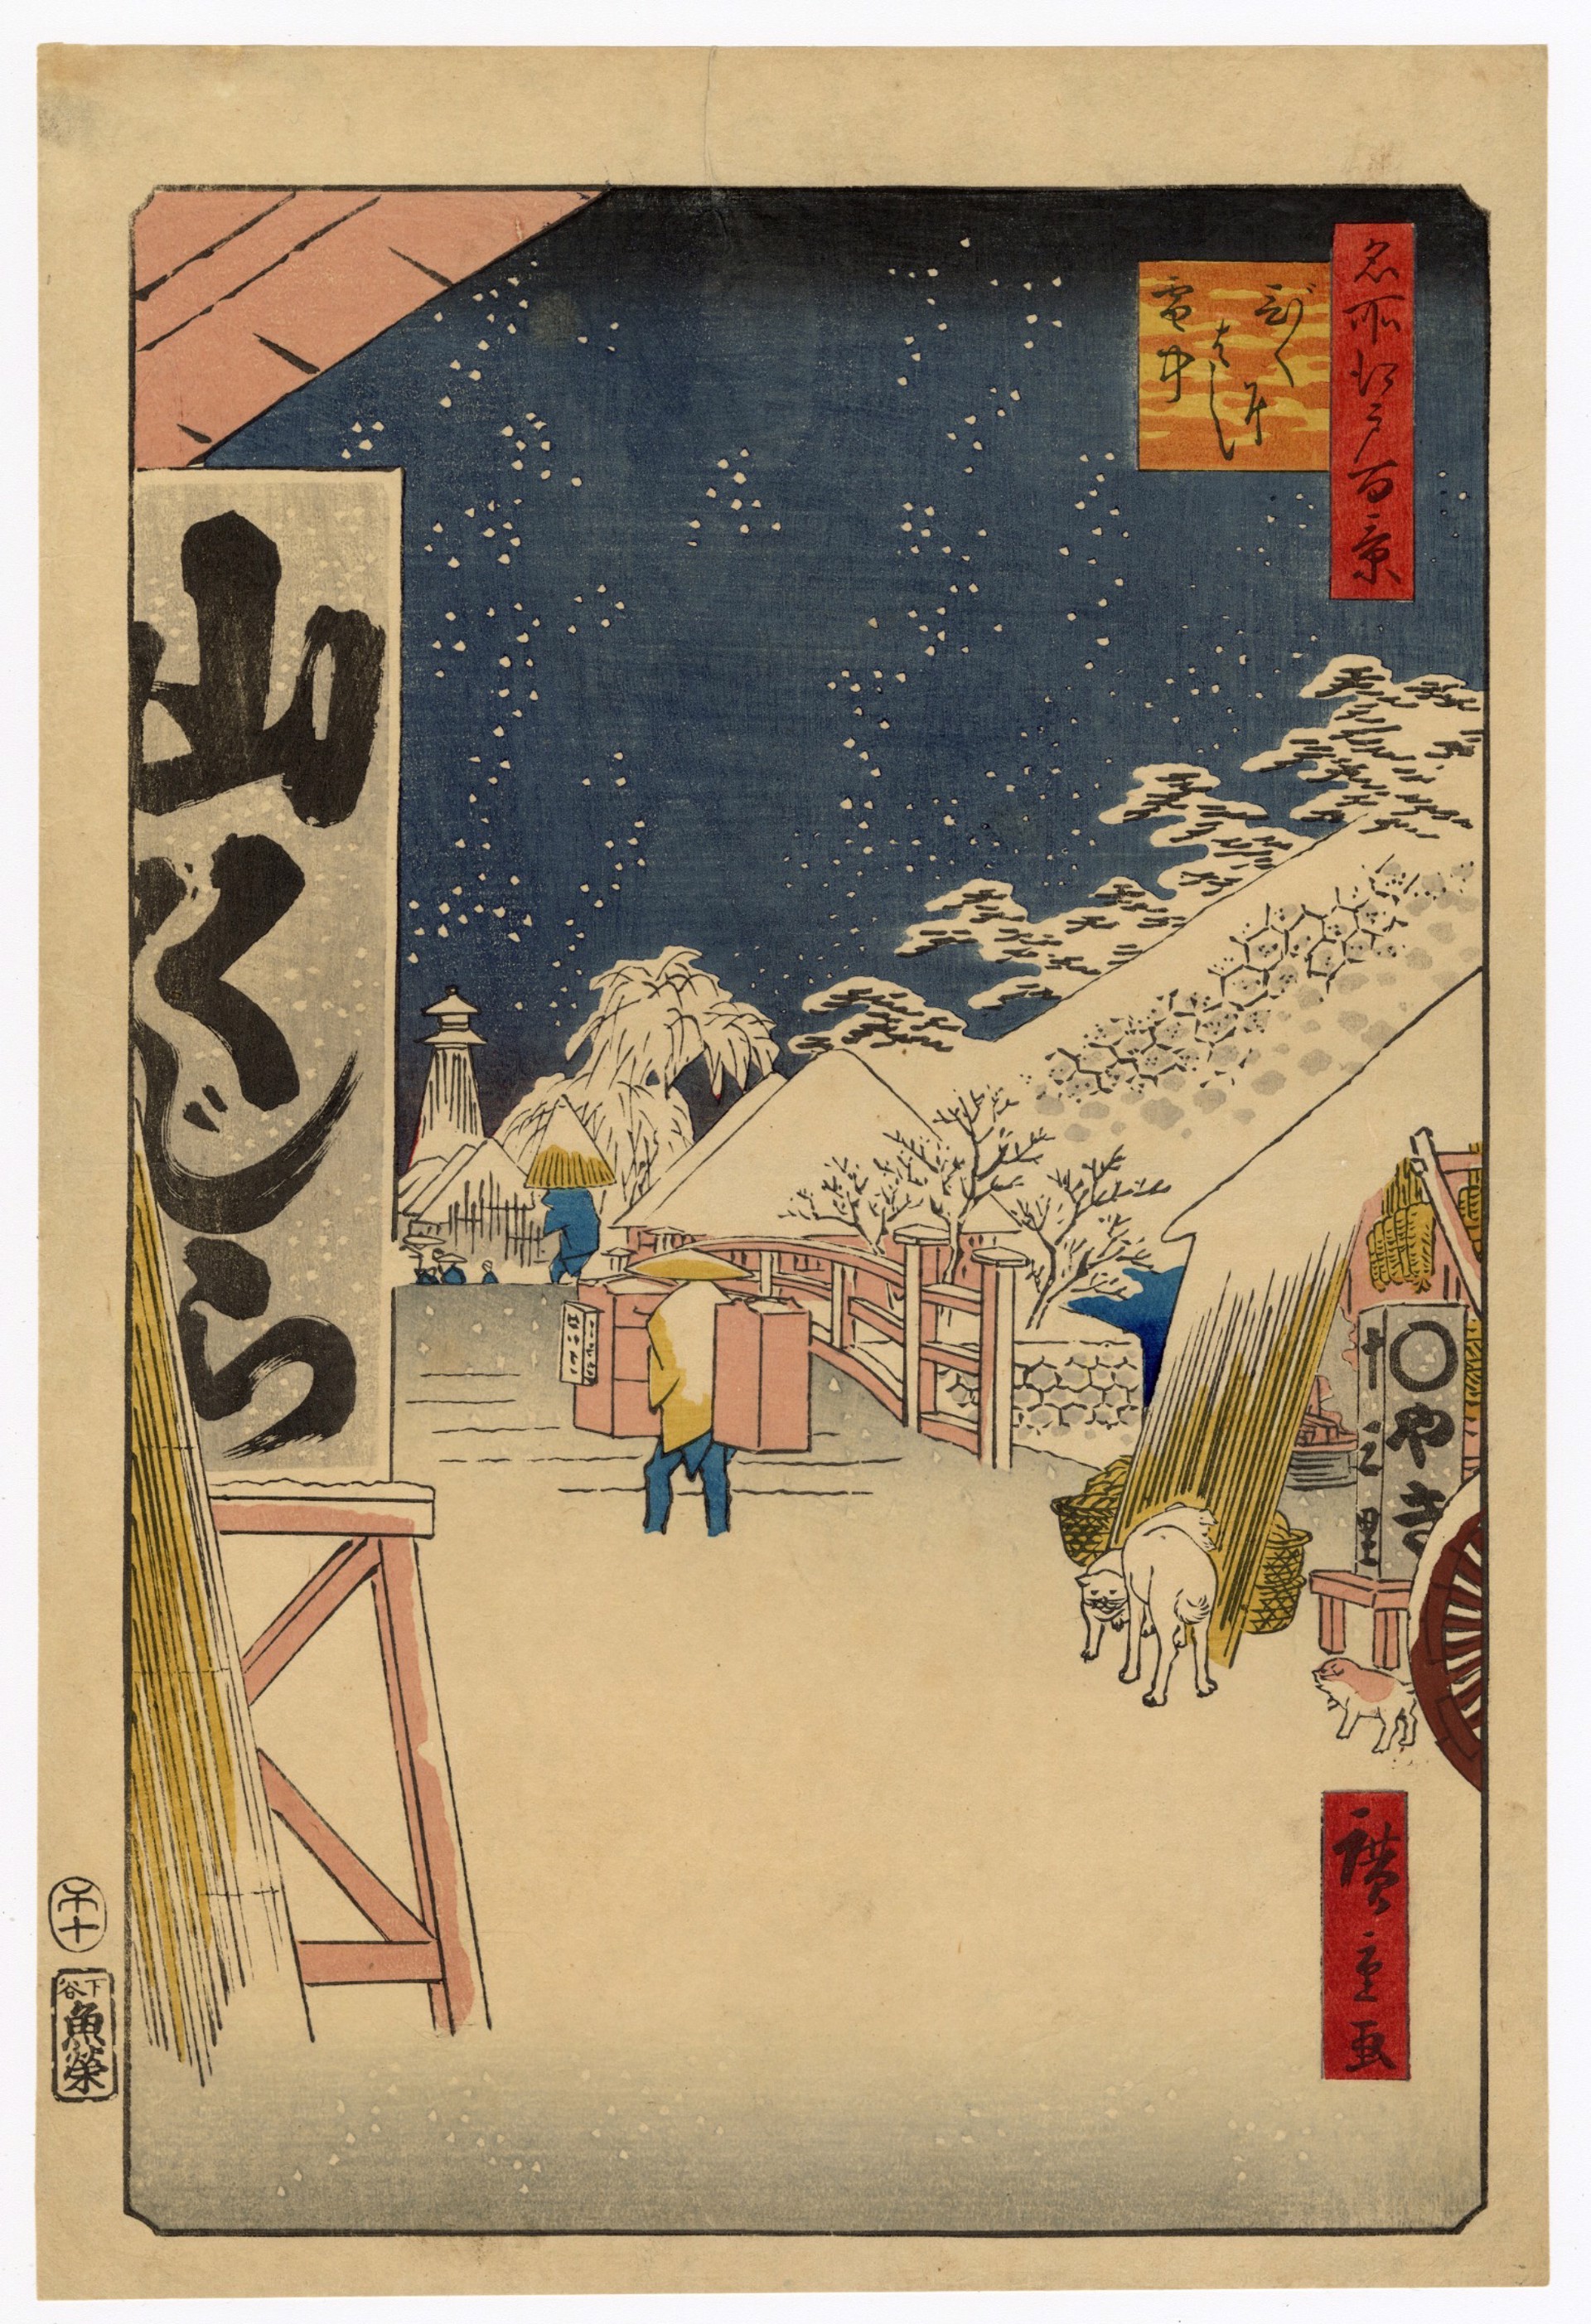 Bikuni Bridge in Snow by Hiroshige